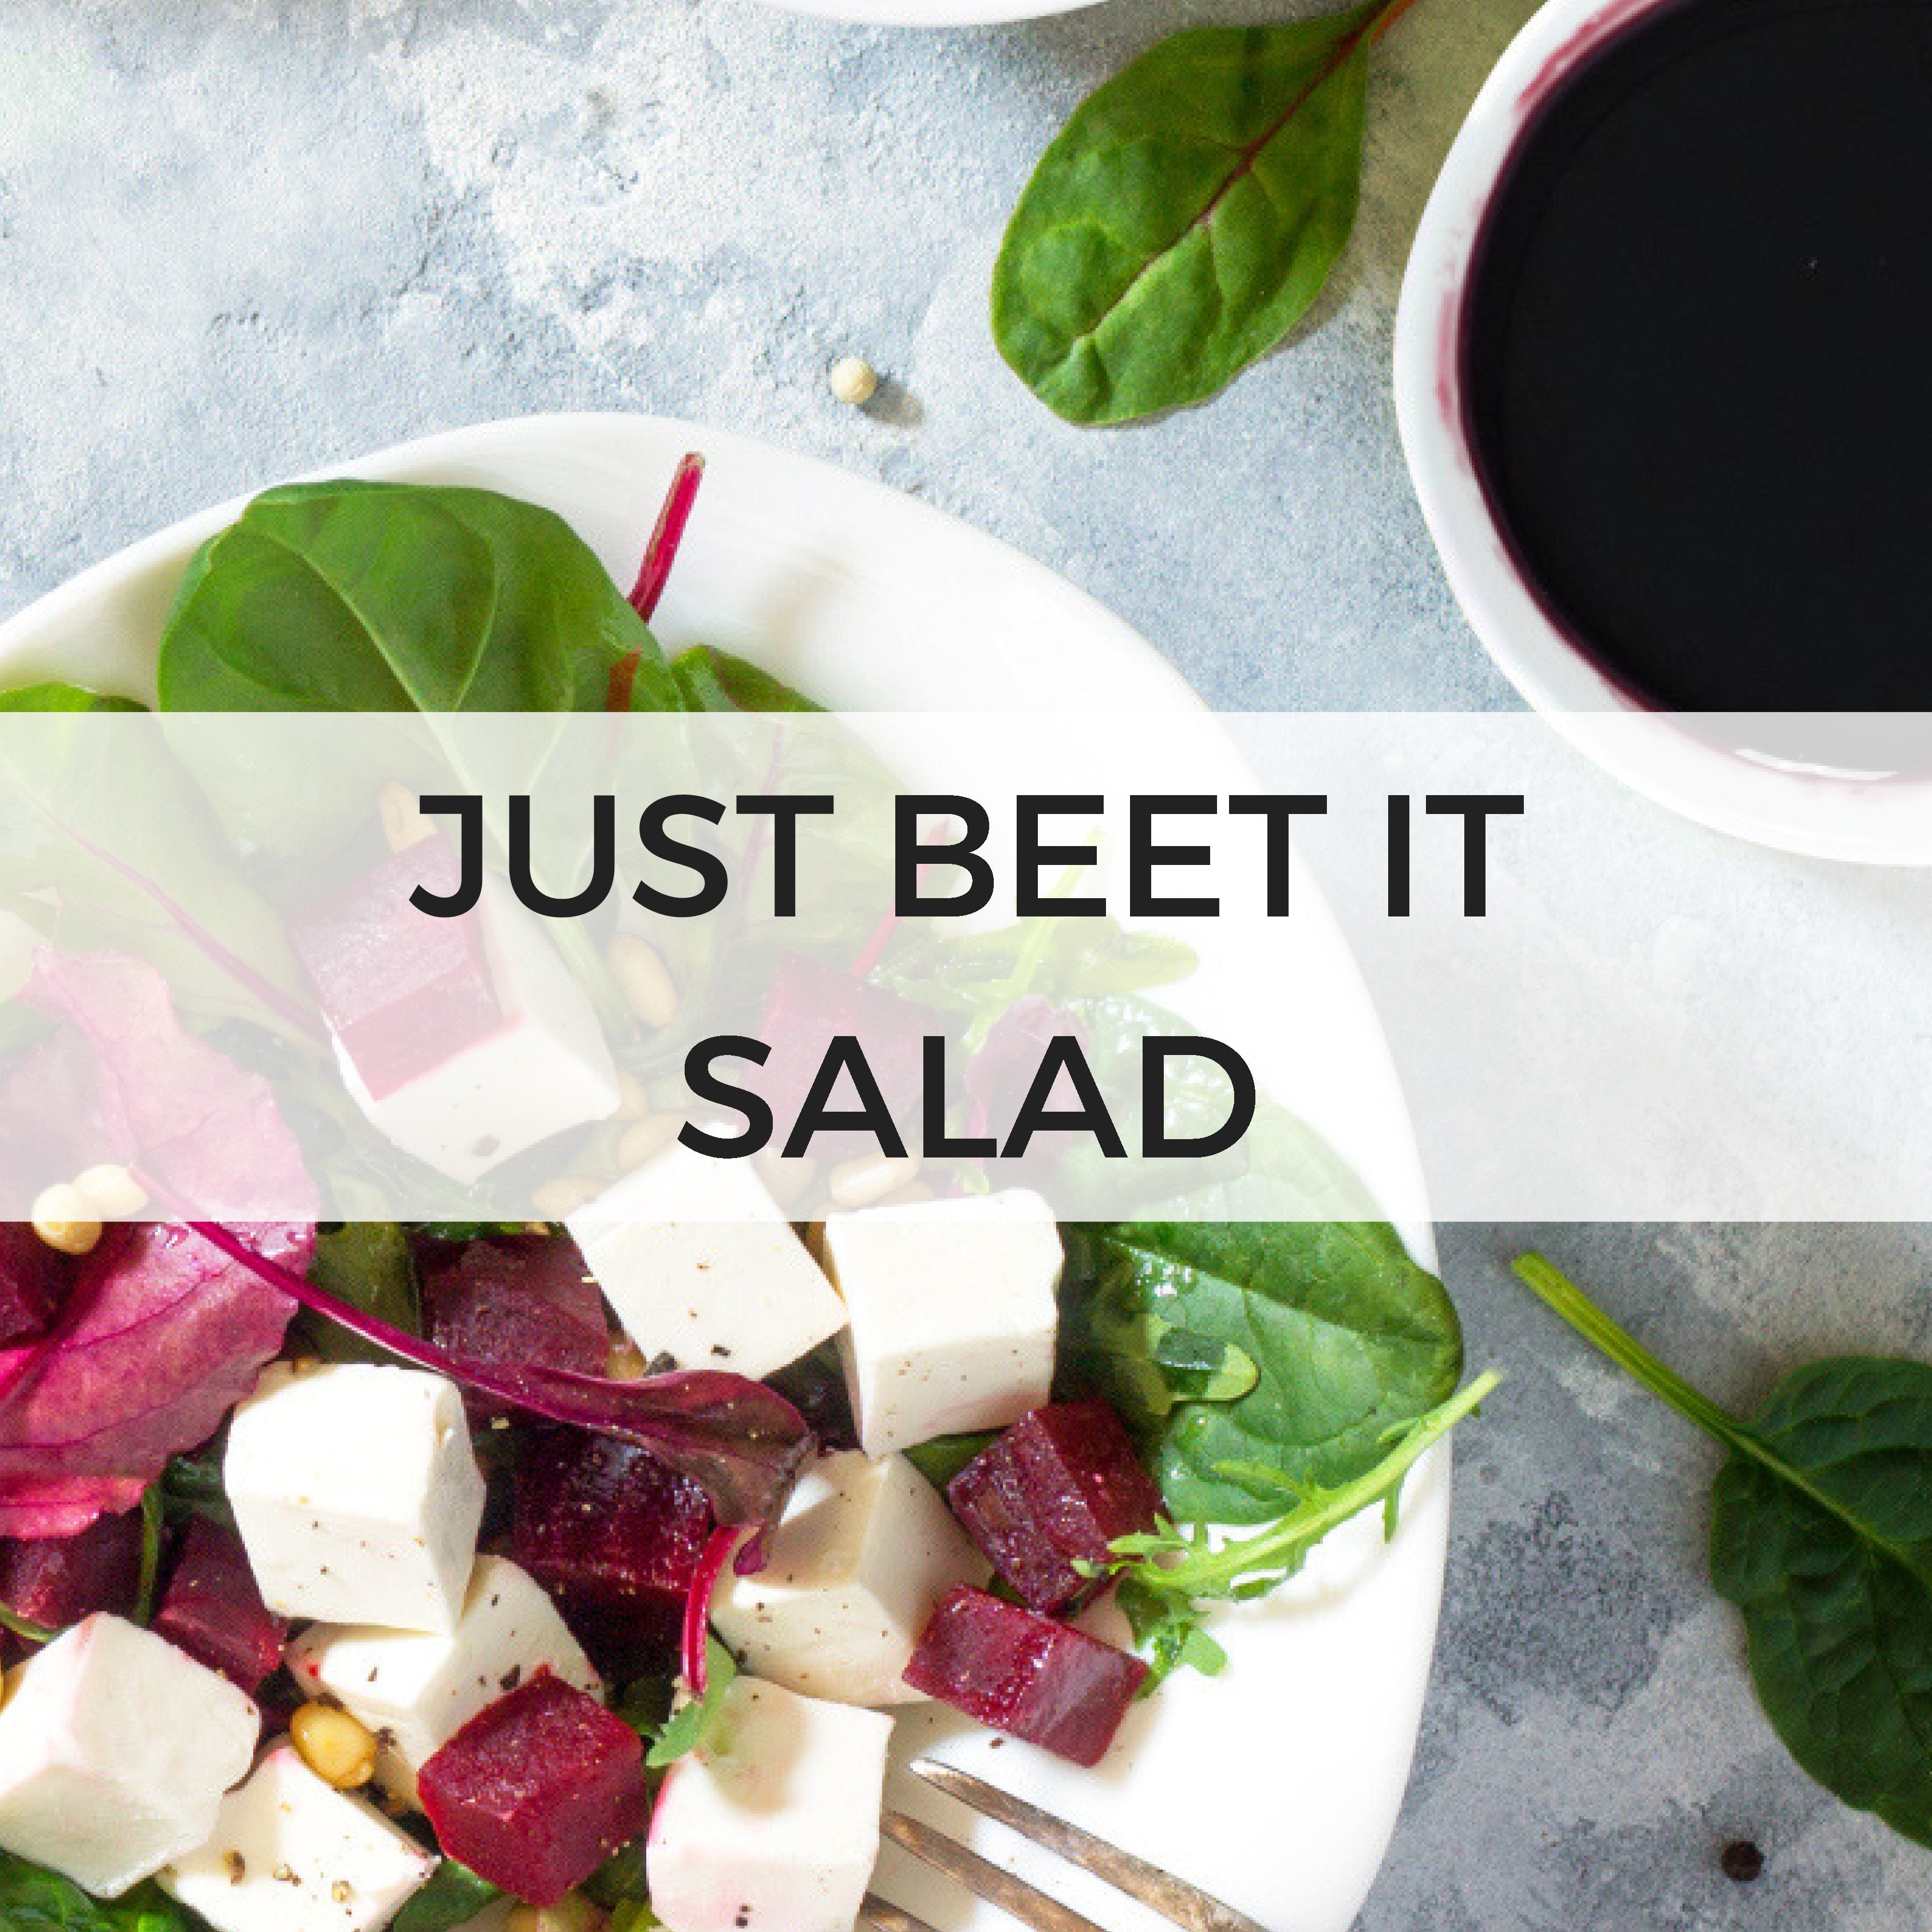 Just Beet It Salad with Tea-Infused Dressing